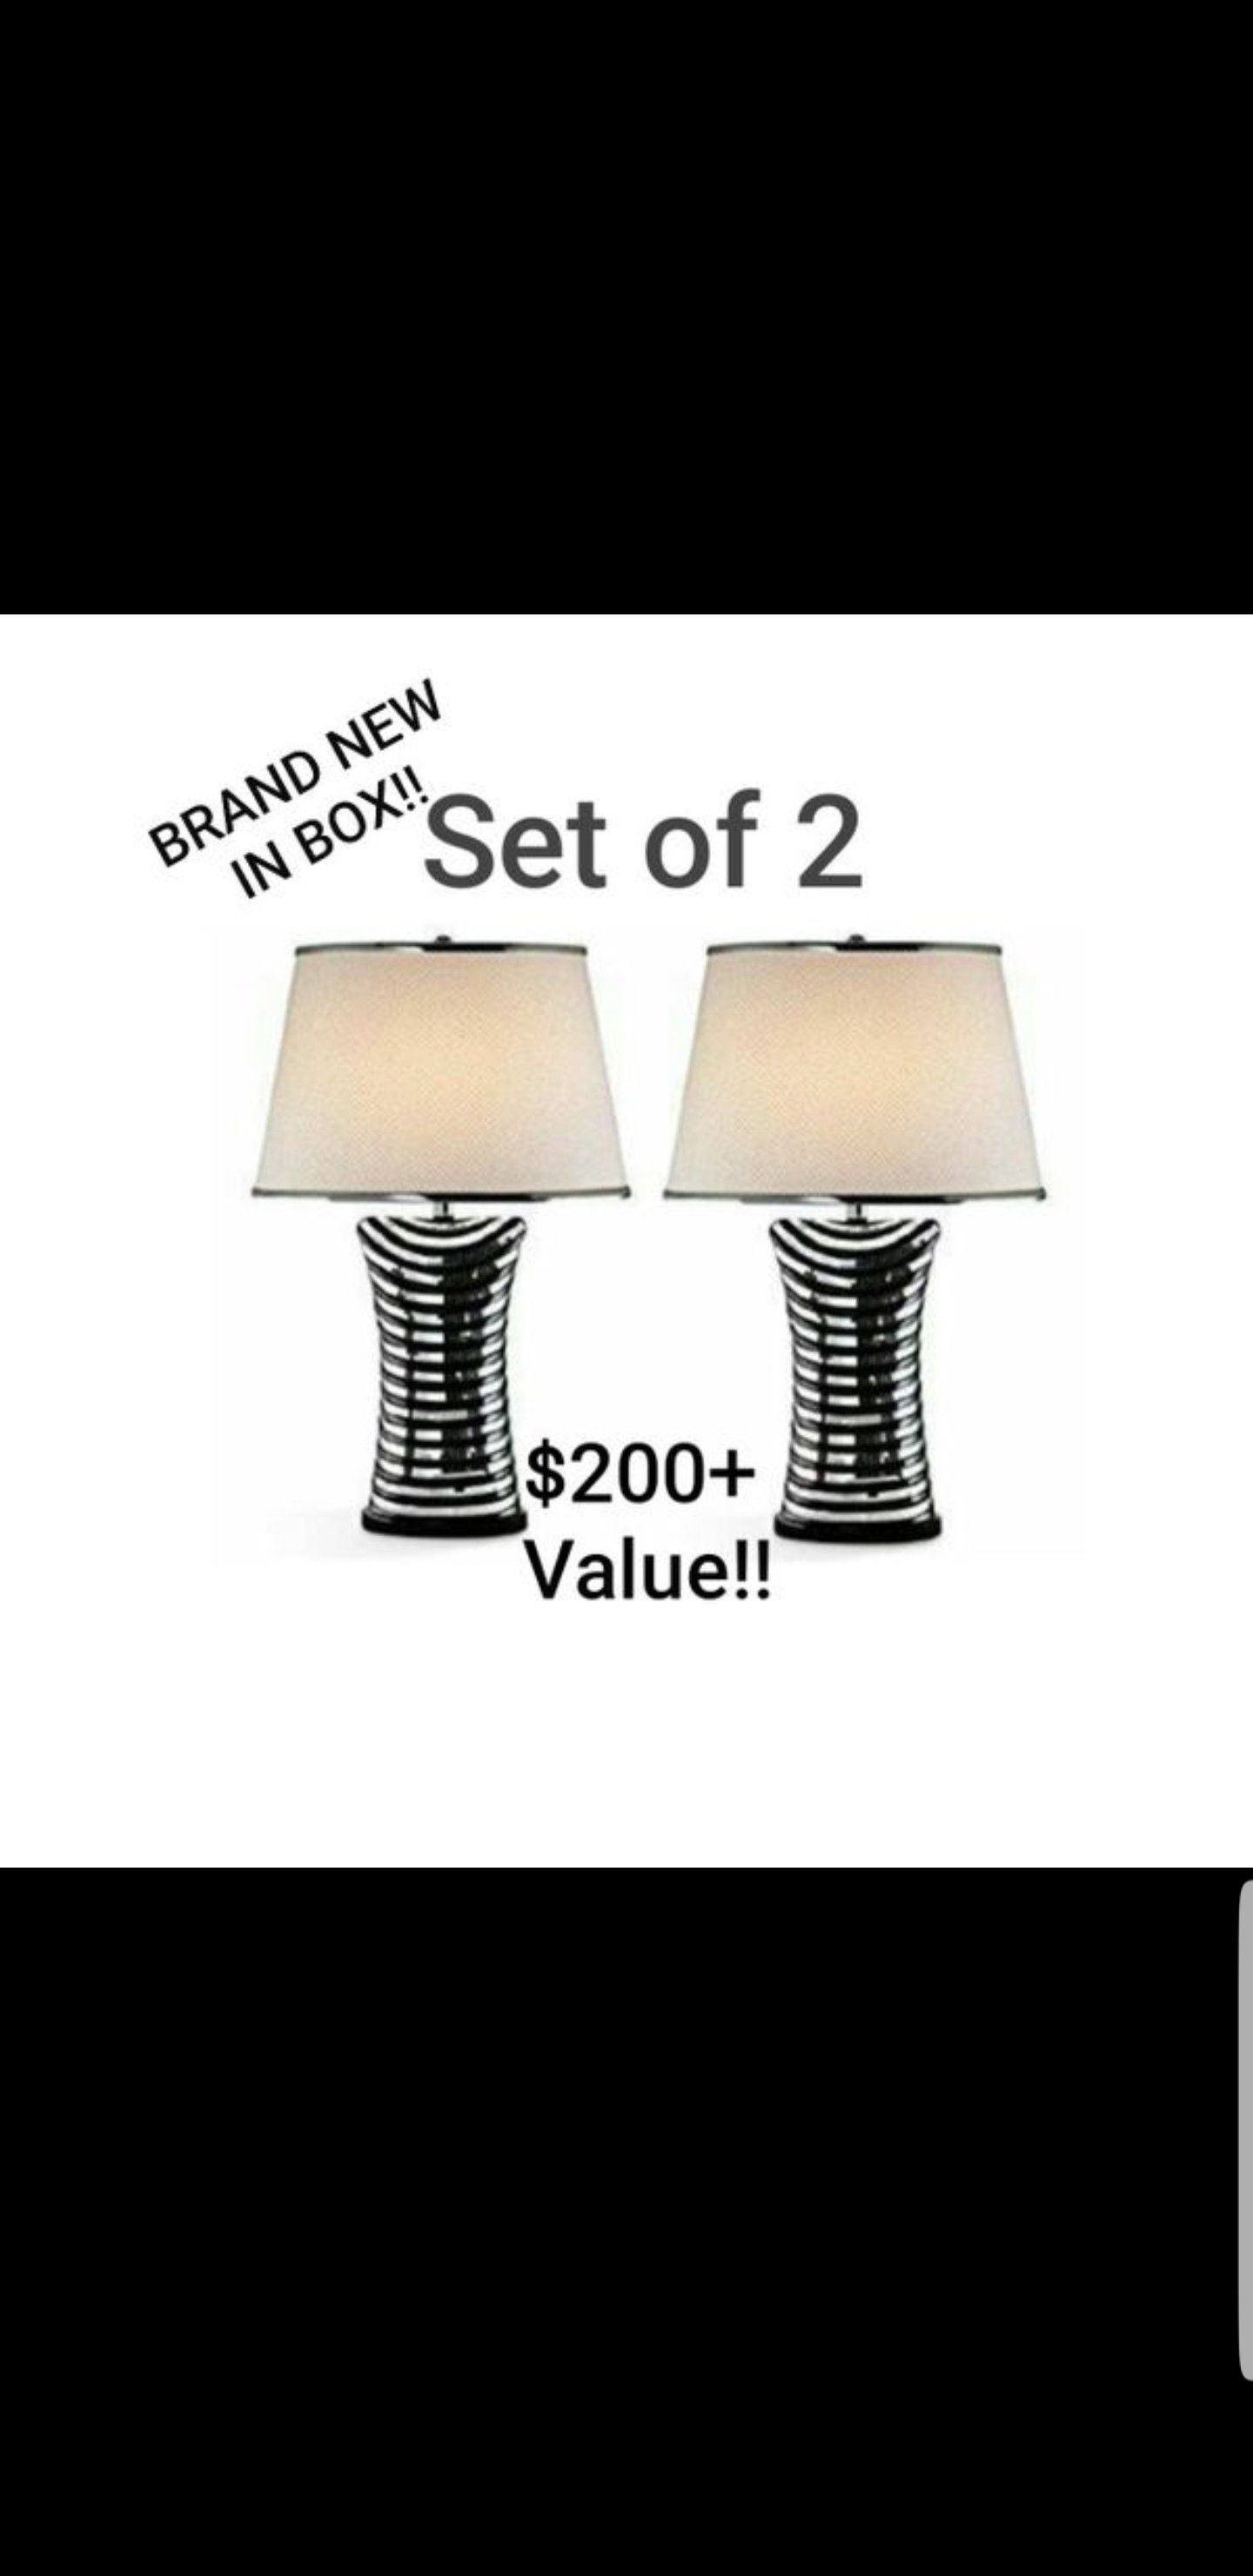 Brand New Set of Ore International Lamps